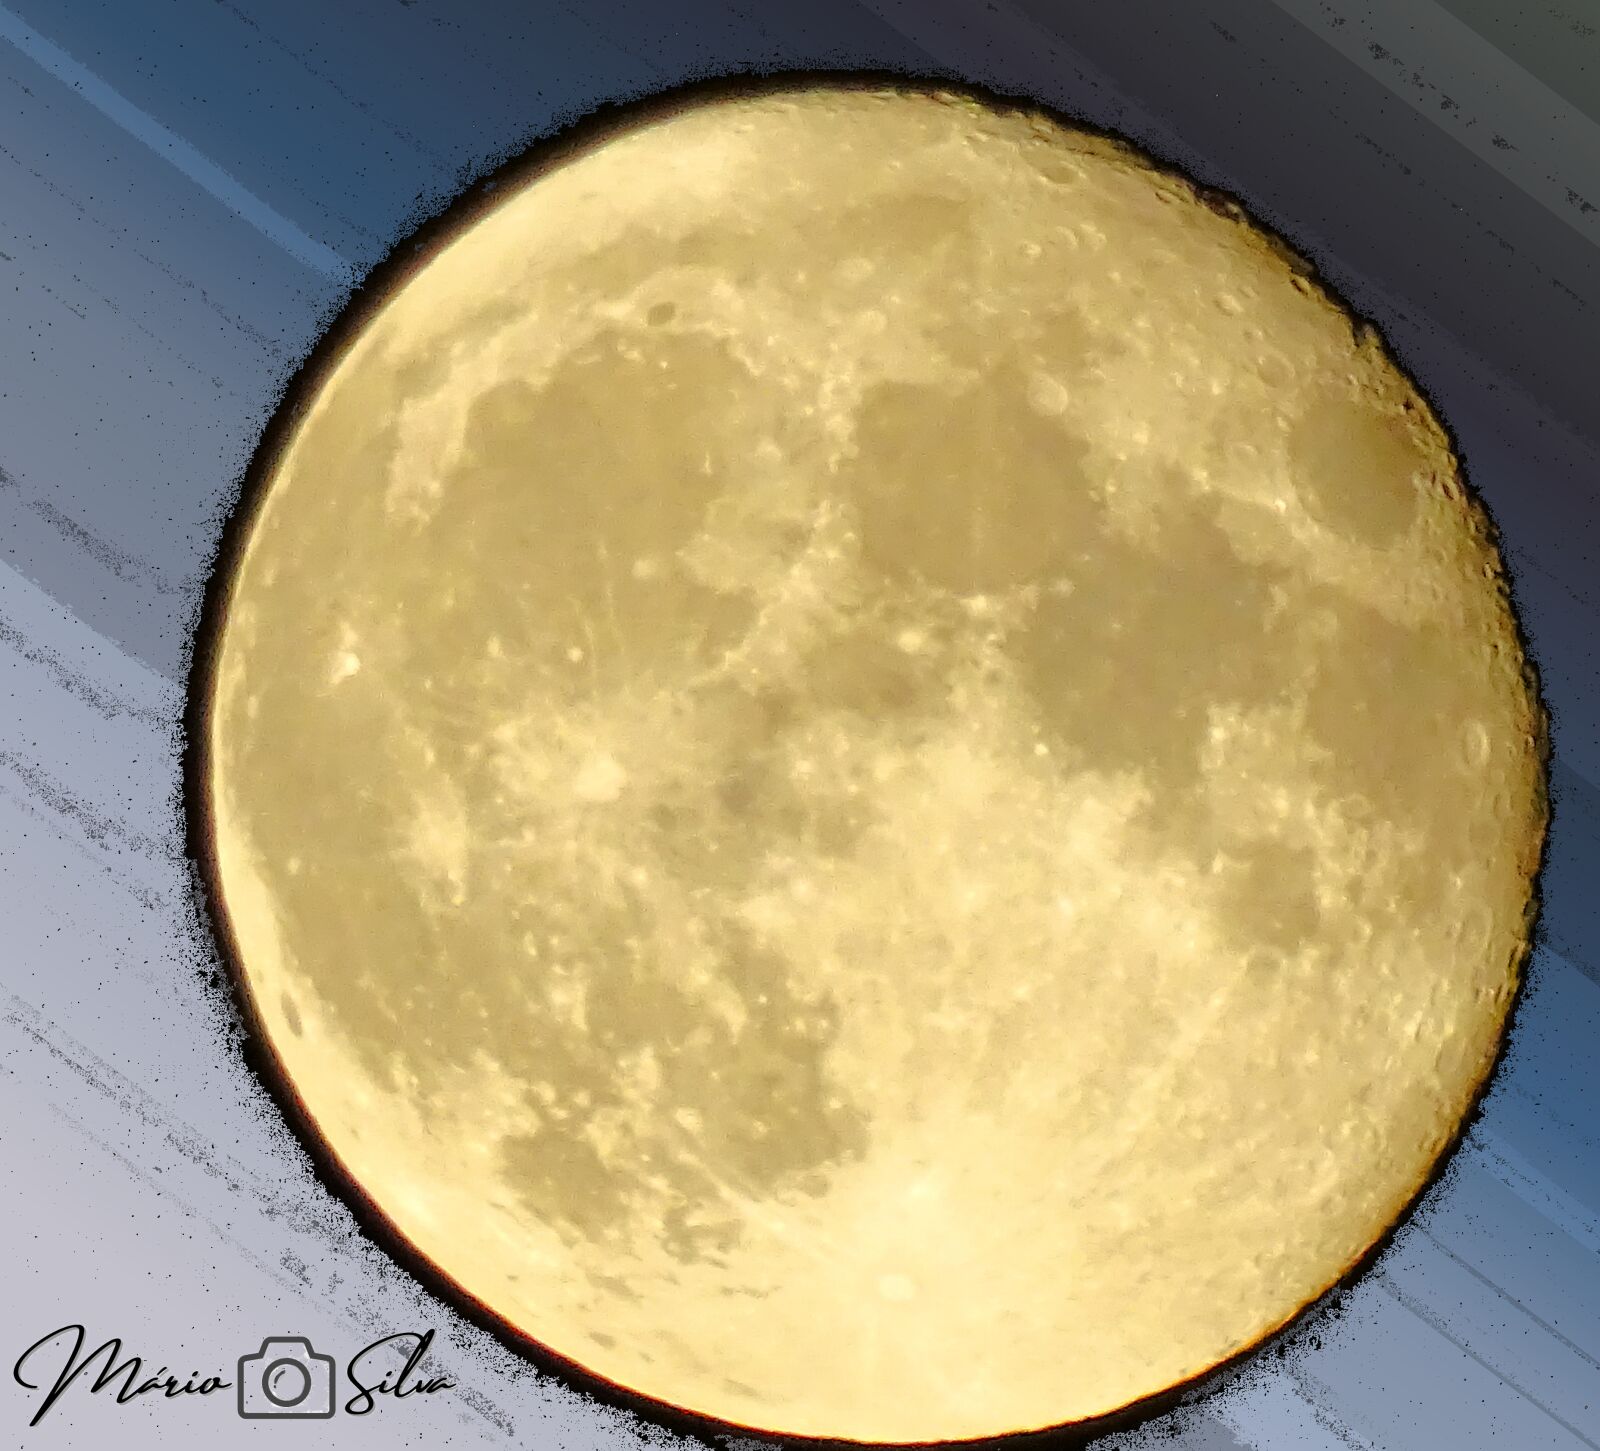 Sony Cyber-shot DSC-HX400V sample photo. Full moon, moon, natural photography